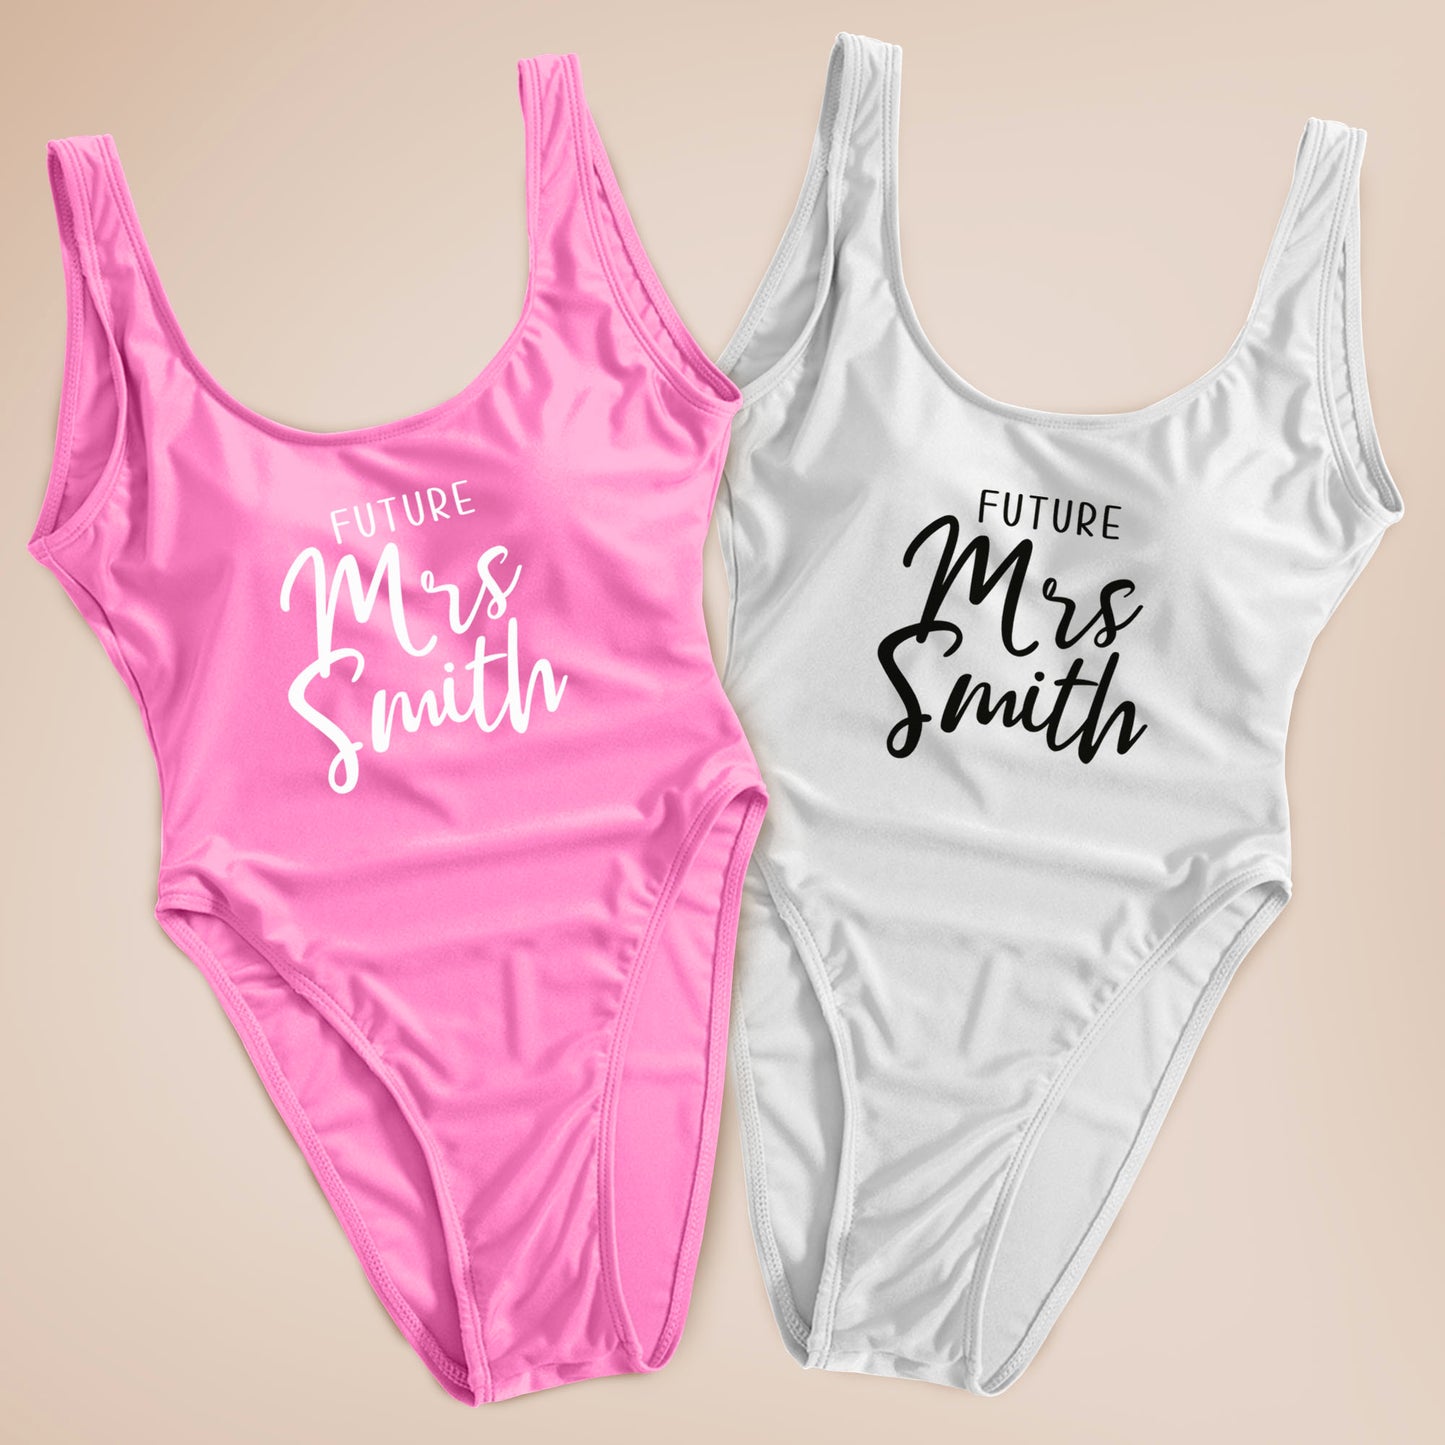 Future Mrs. Smith Bride Swimsuit